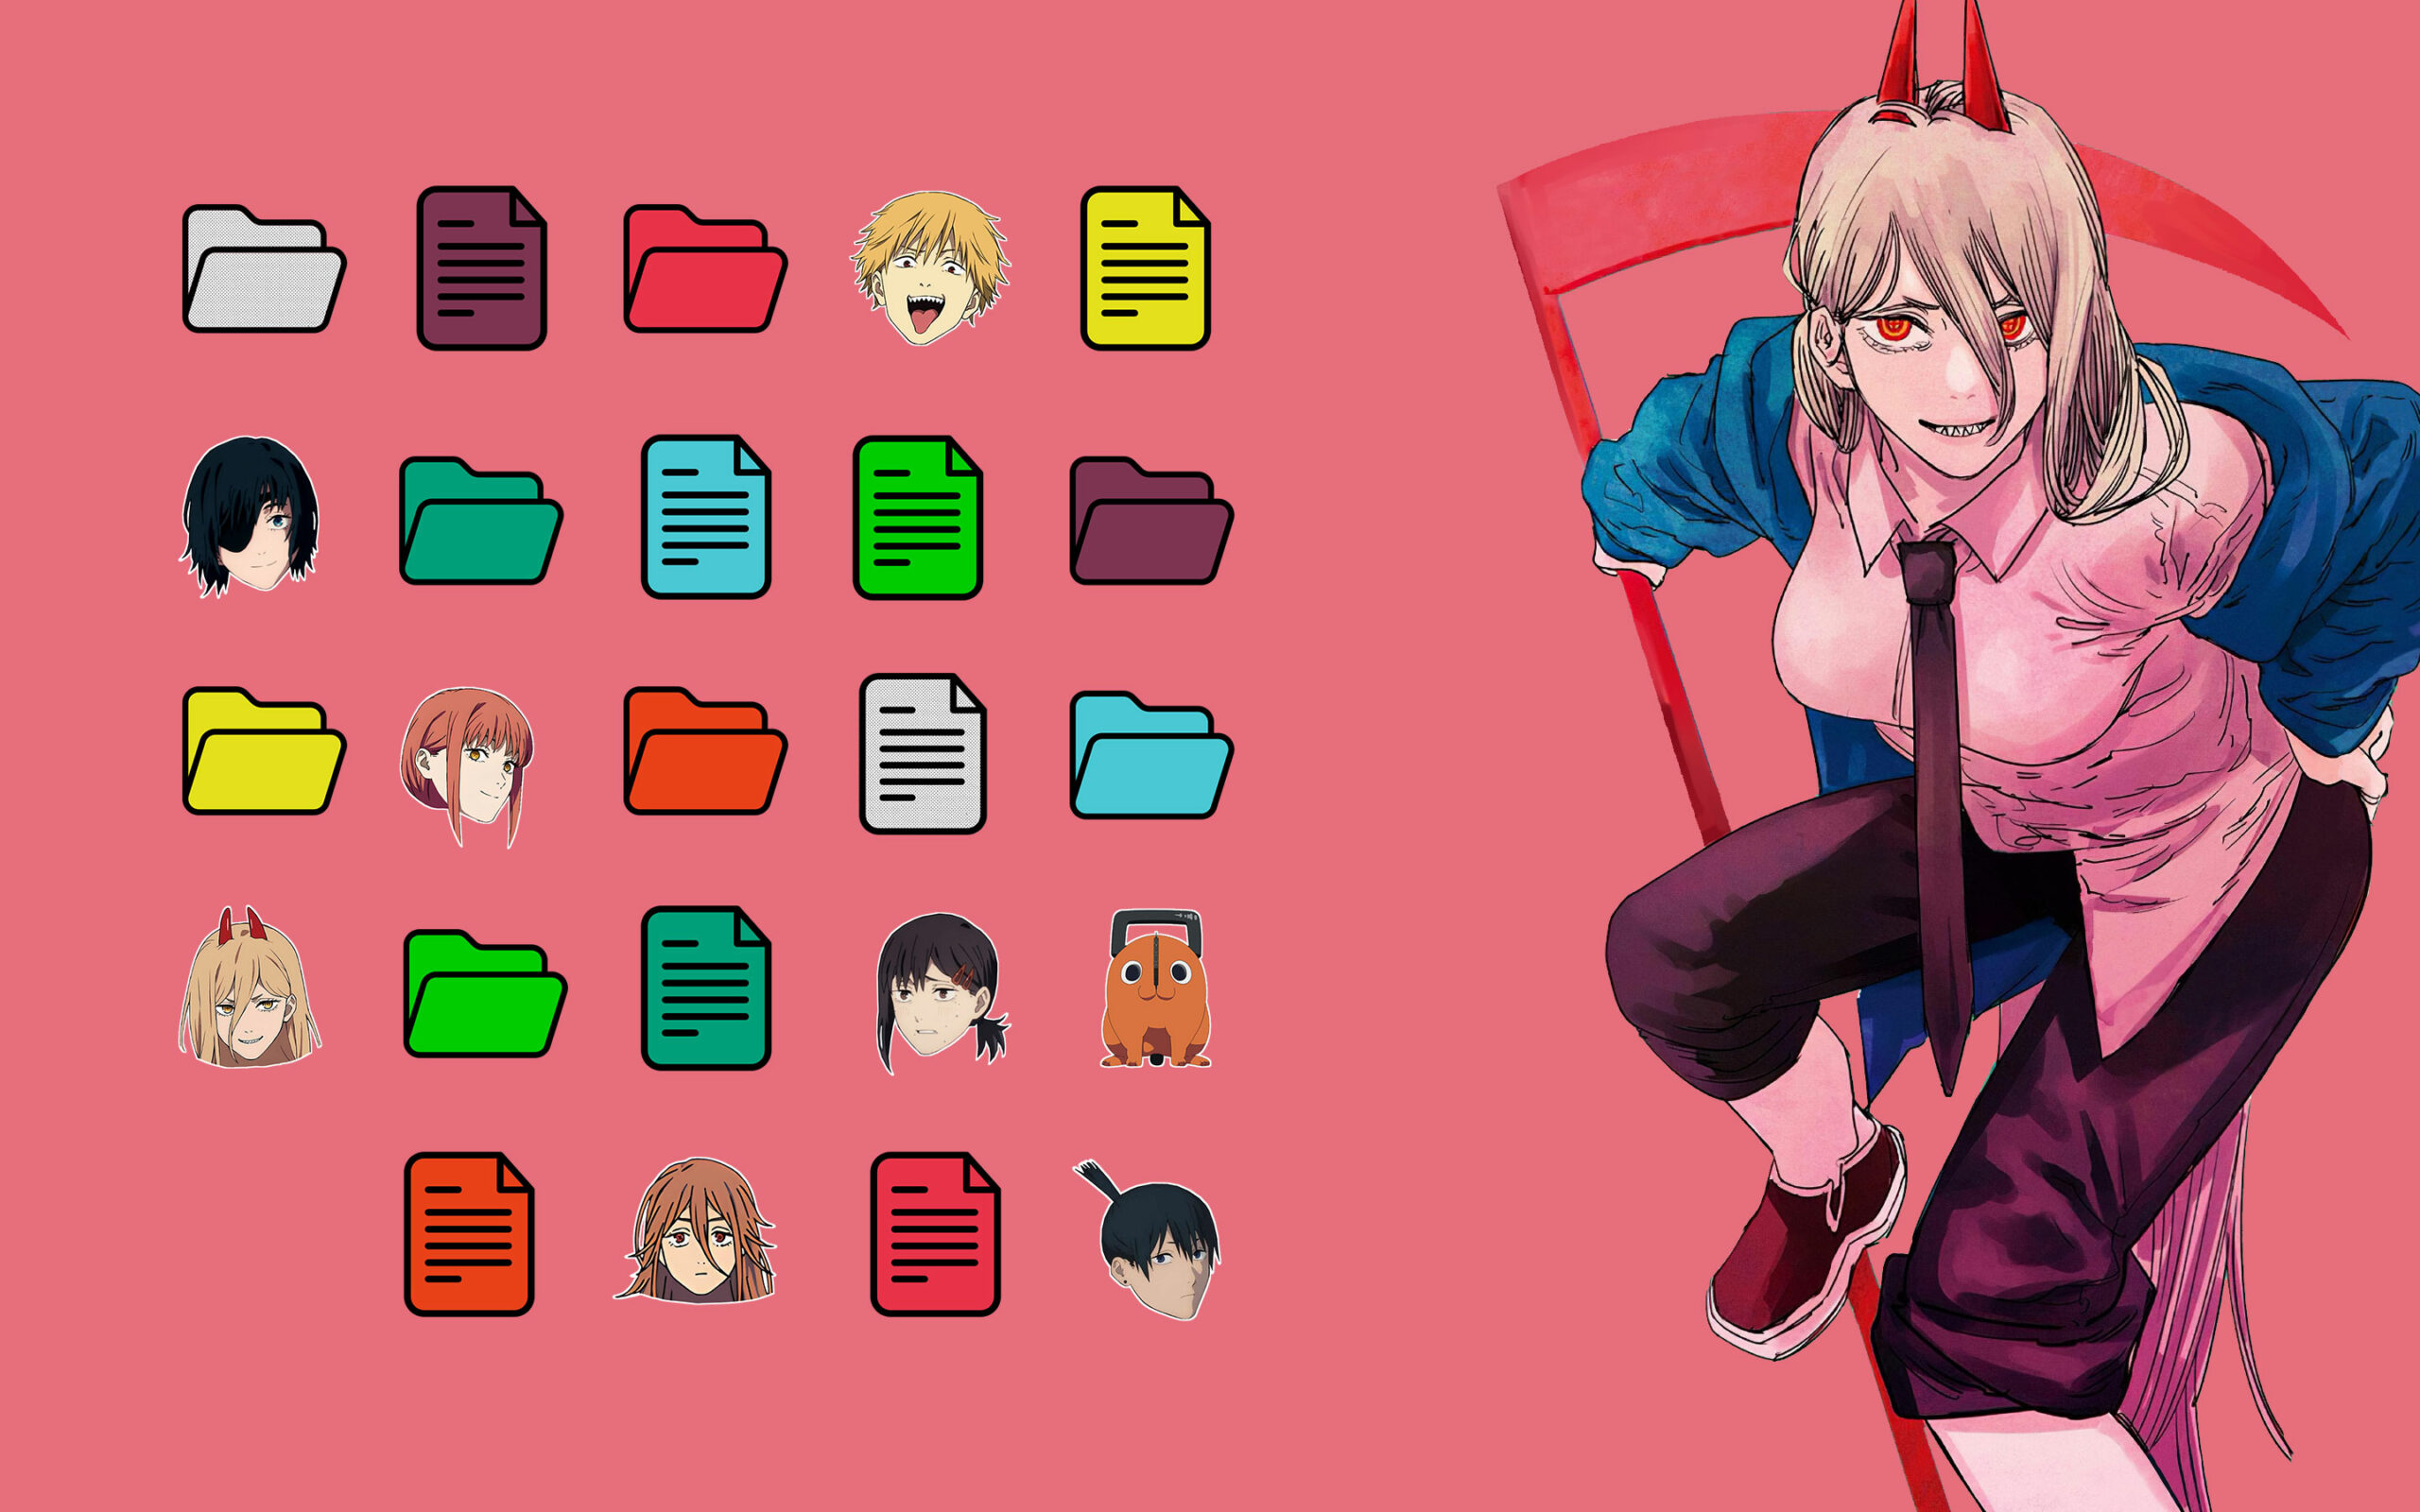 Chainsaw Man Folder Icons for Mac Free - Anime Desktop Icons